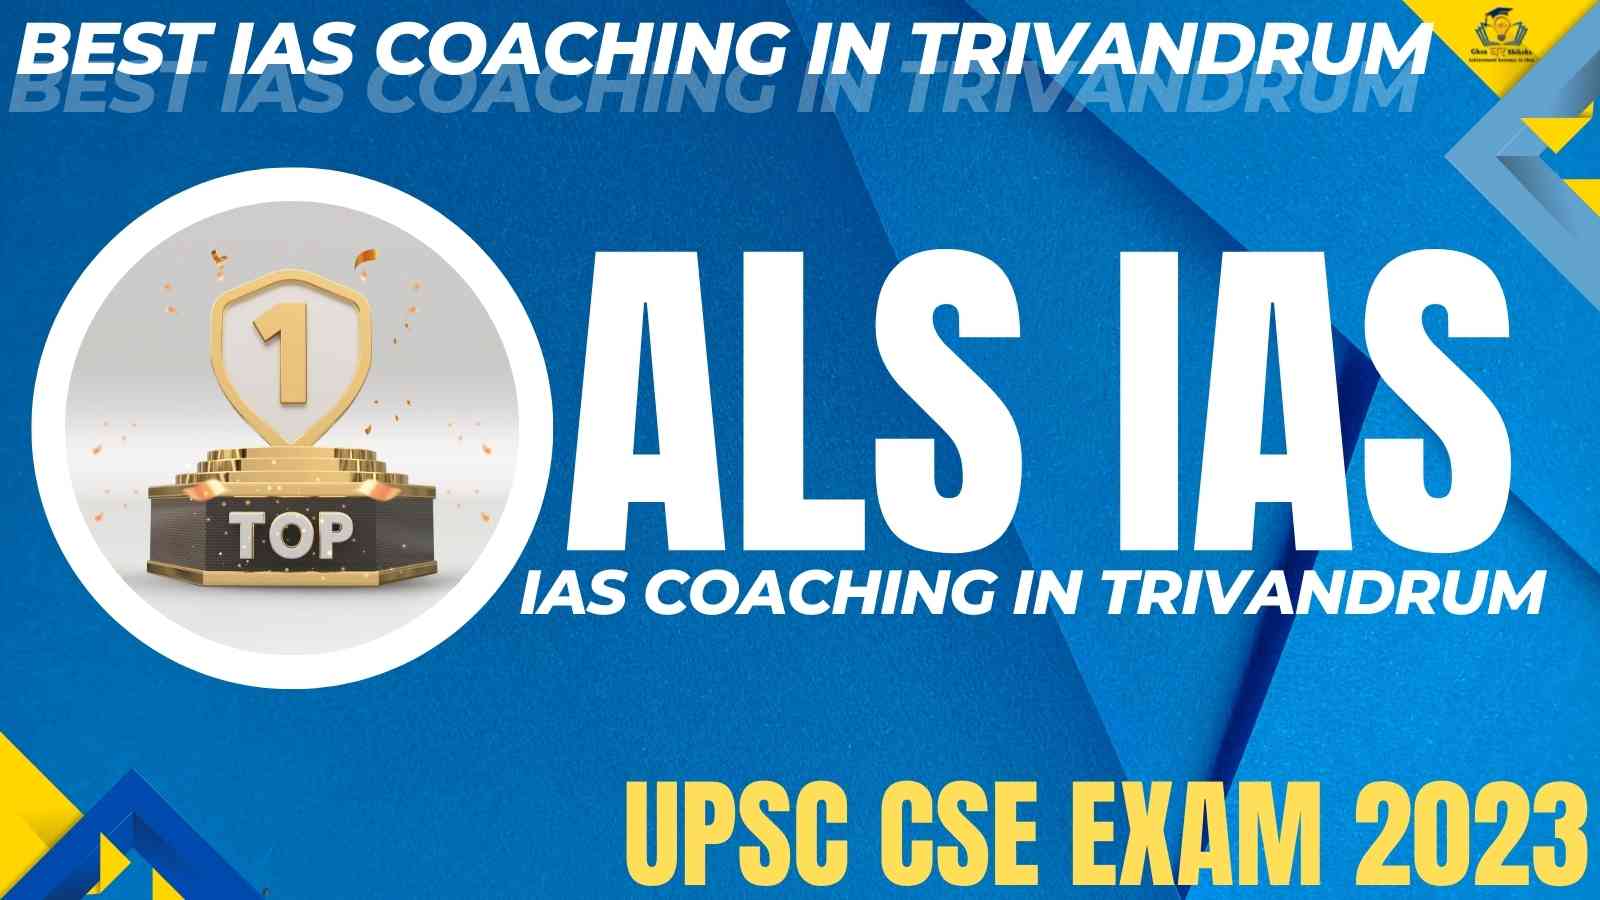 Top IAS Coaching of Trivandrum